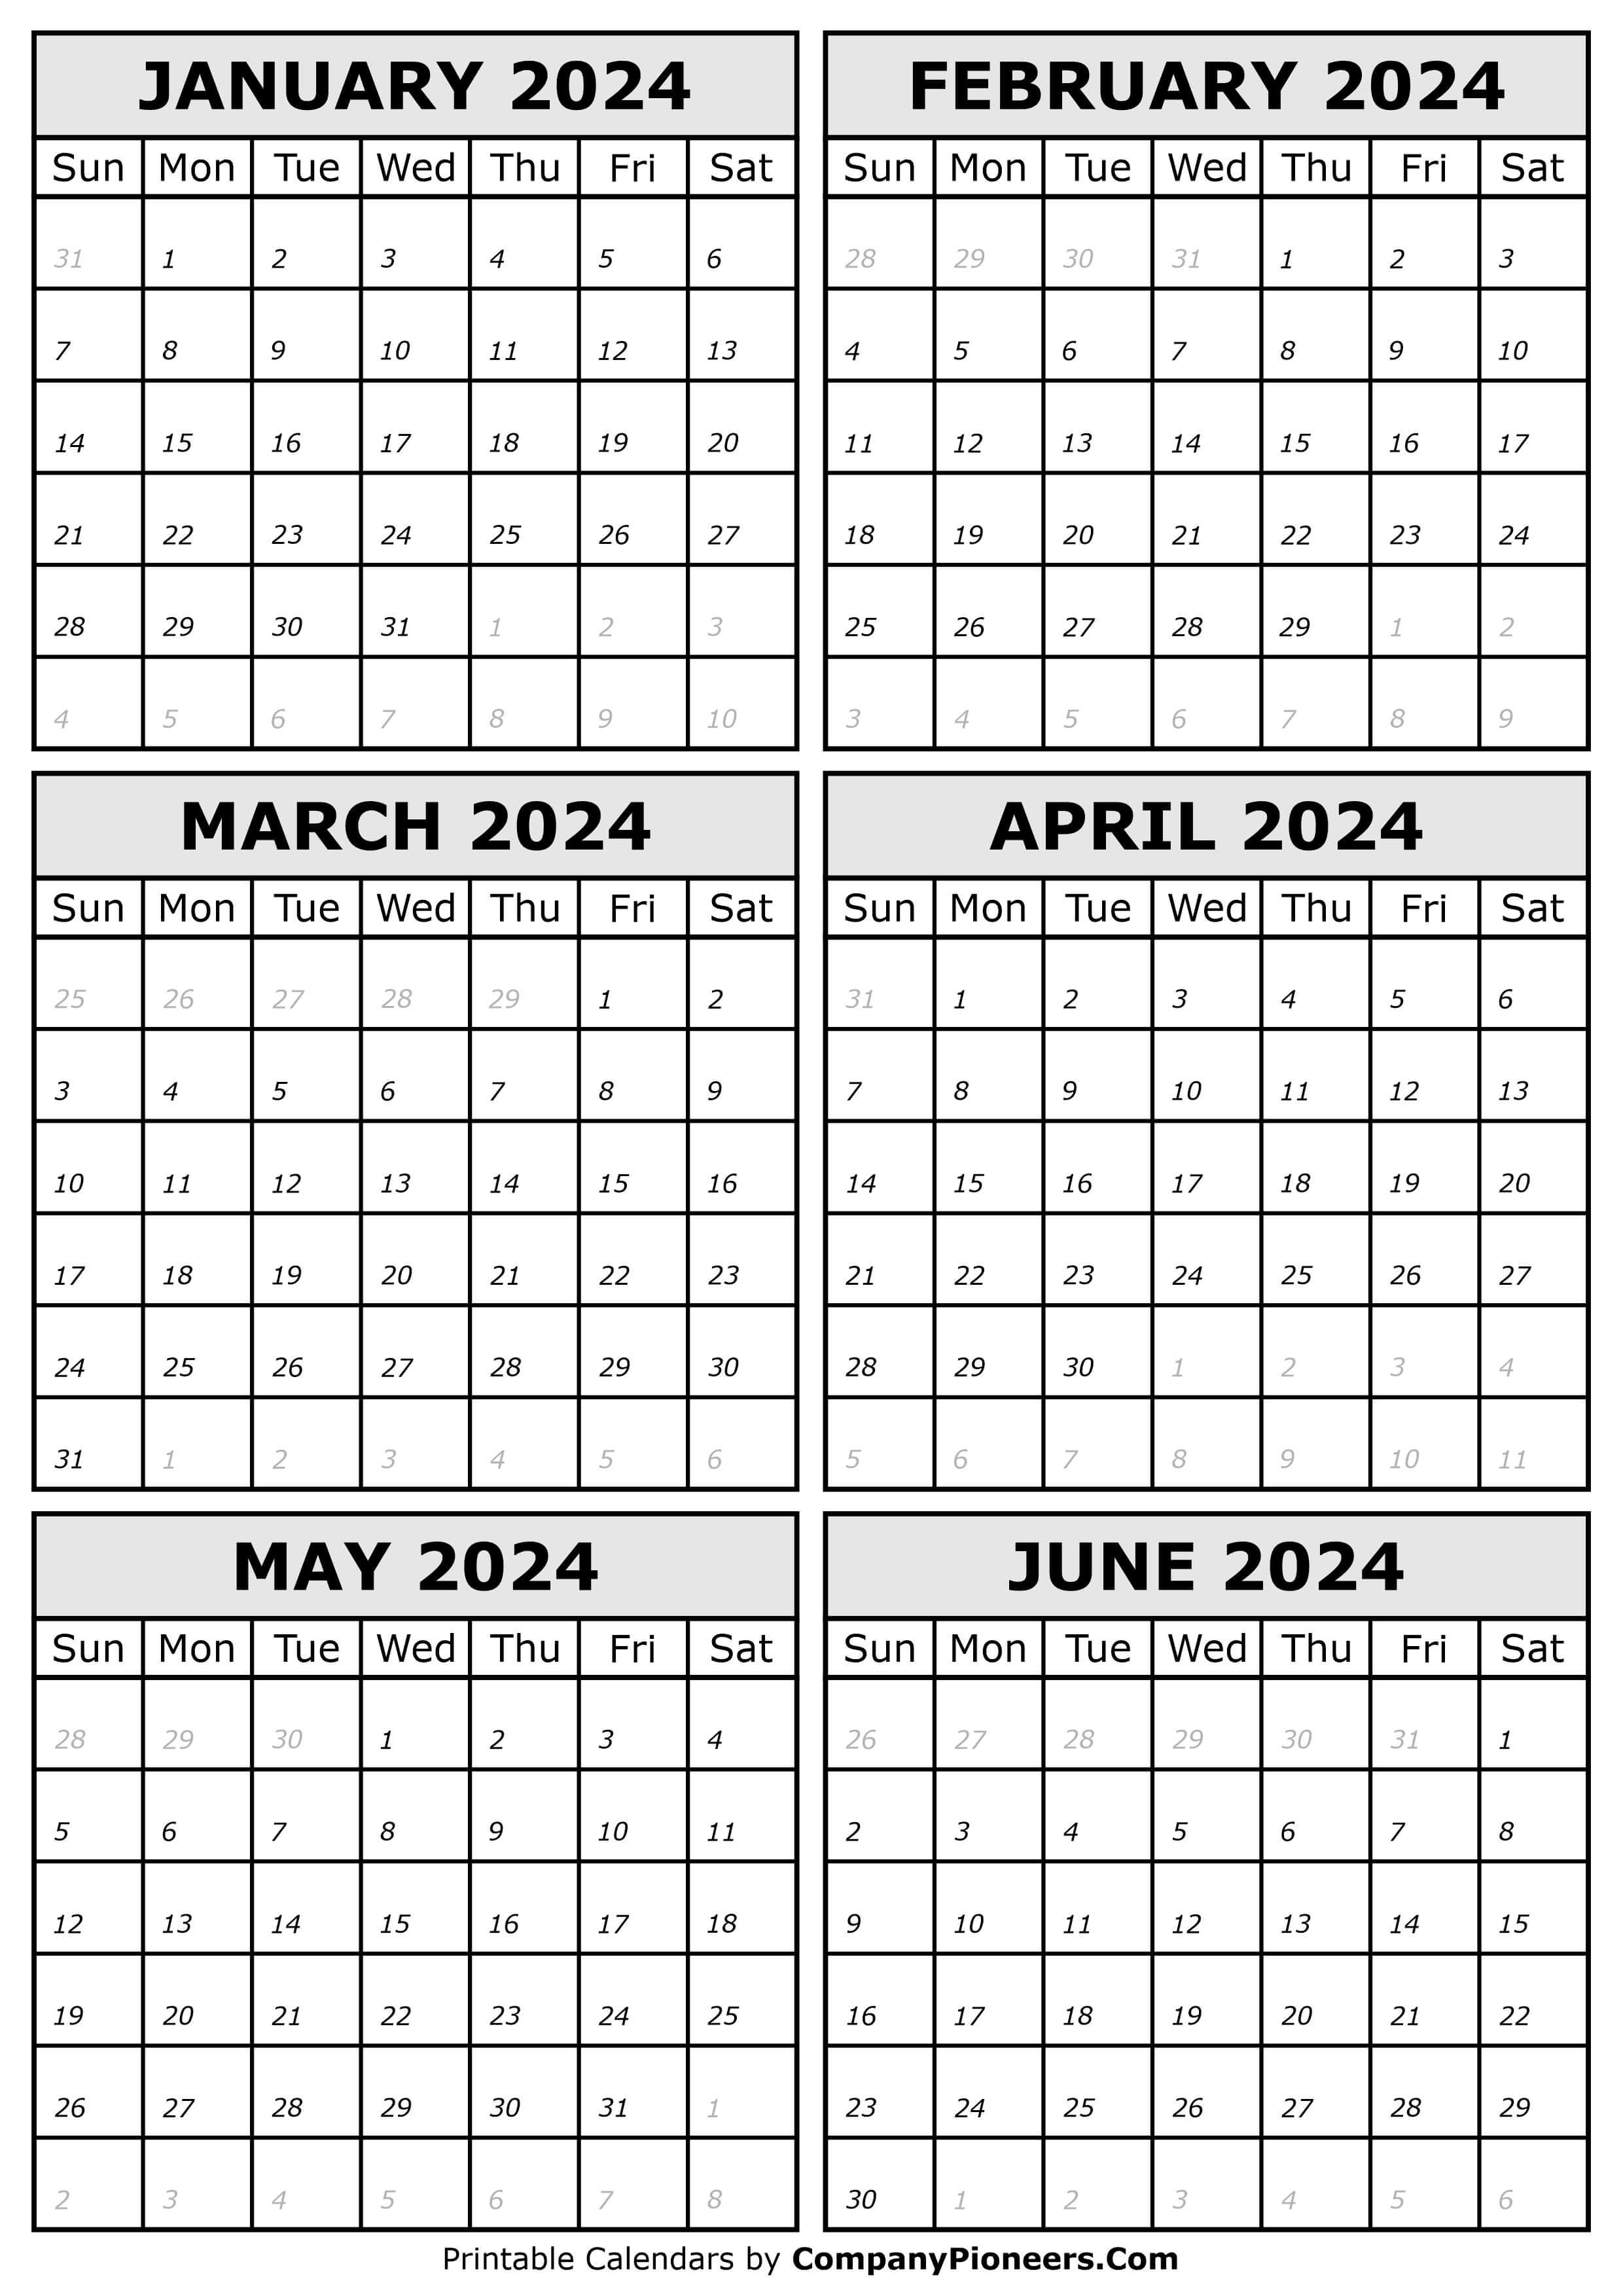 January 2024 to June 2024 Calendar Printable - Template